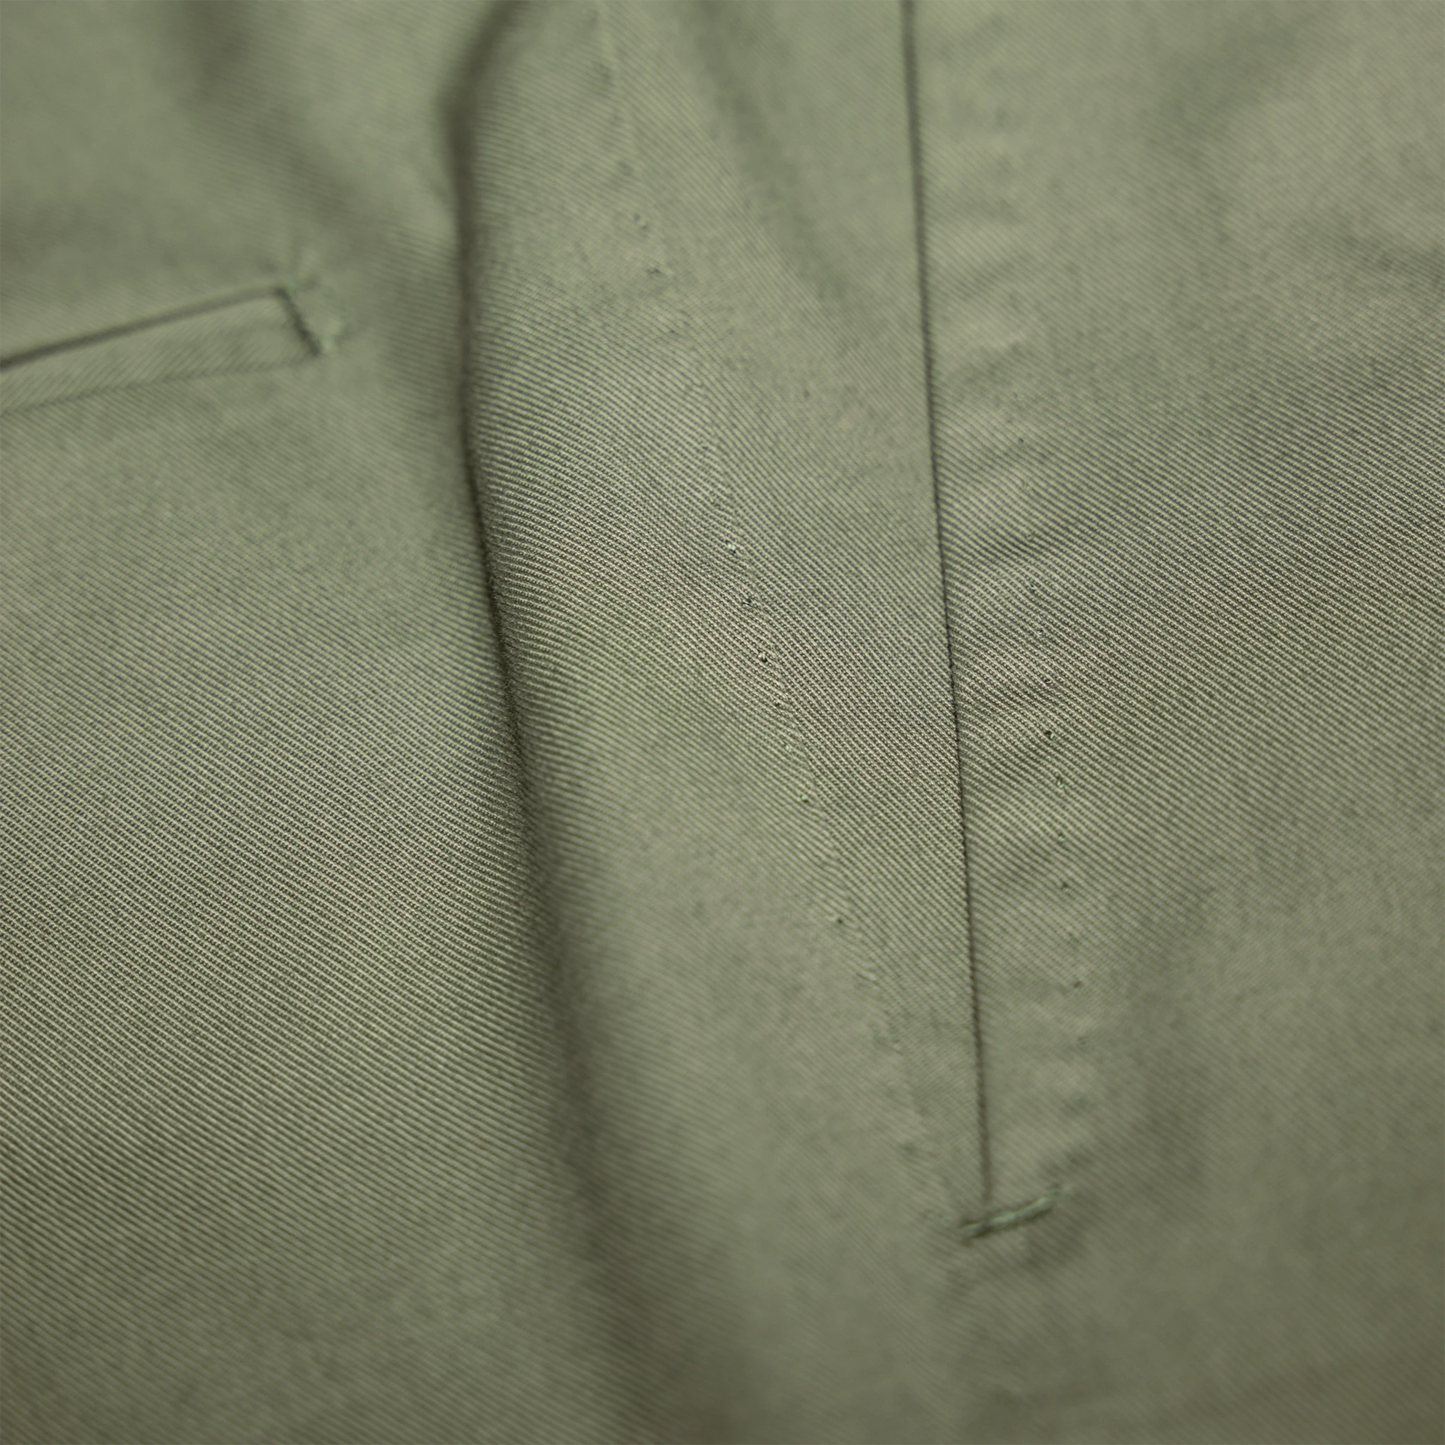 Trousers Hefei green Cotton twill